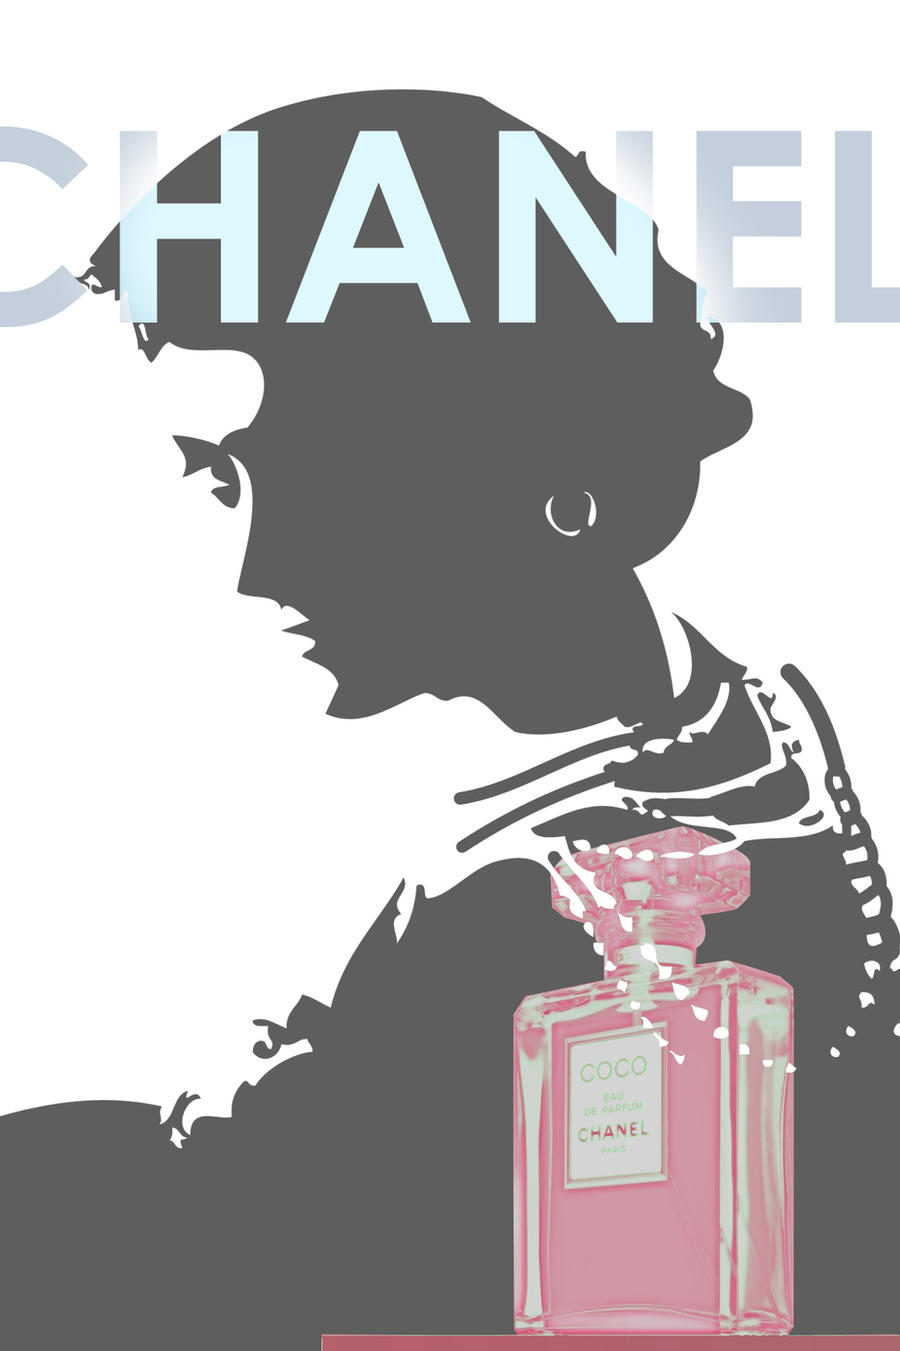 Coco Chanel Advertisement 2 by kokorostudio on DeviantArt